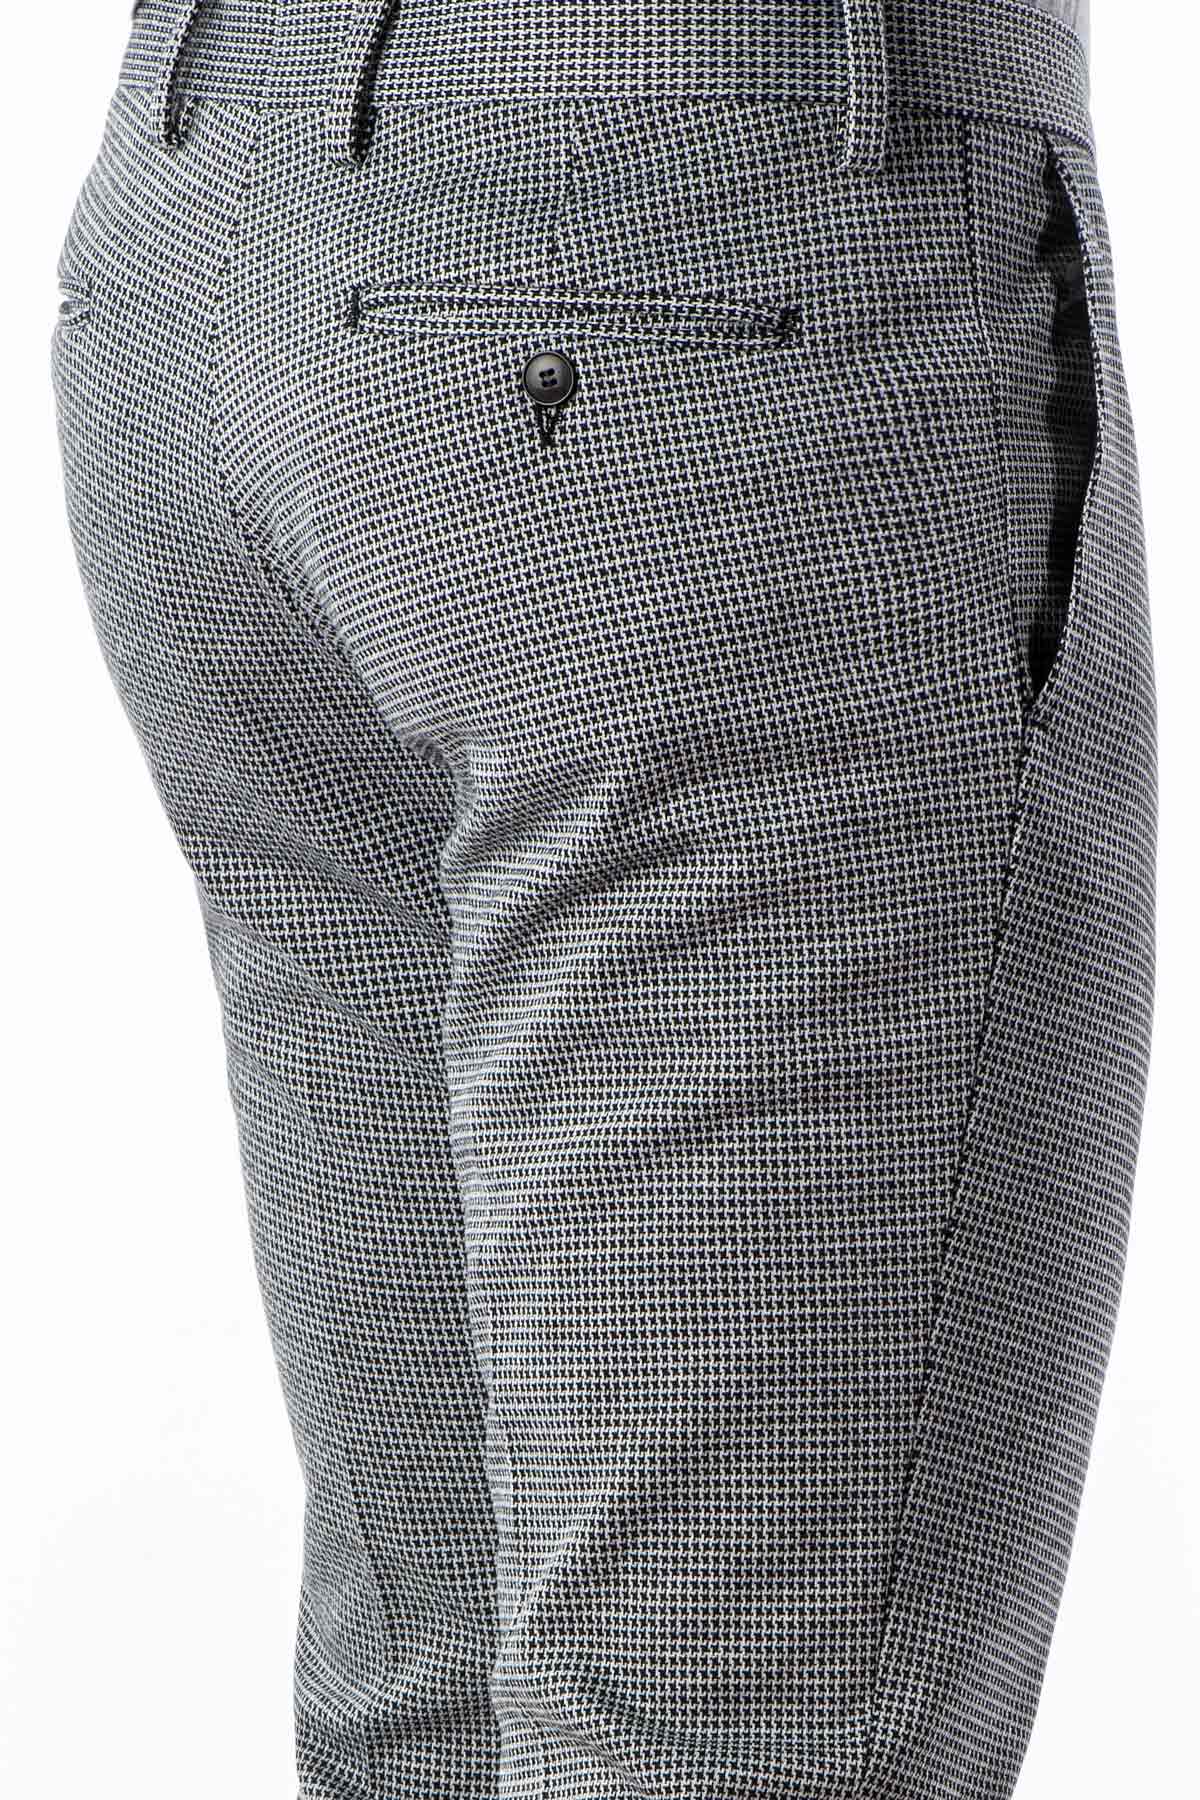 Pantalone tweed Aldgate